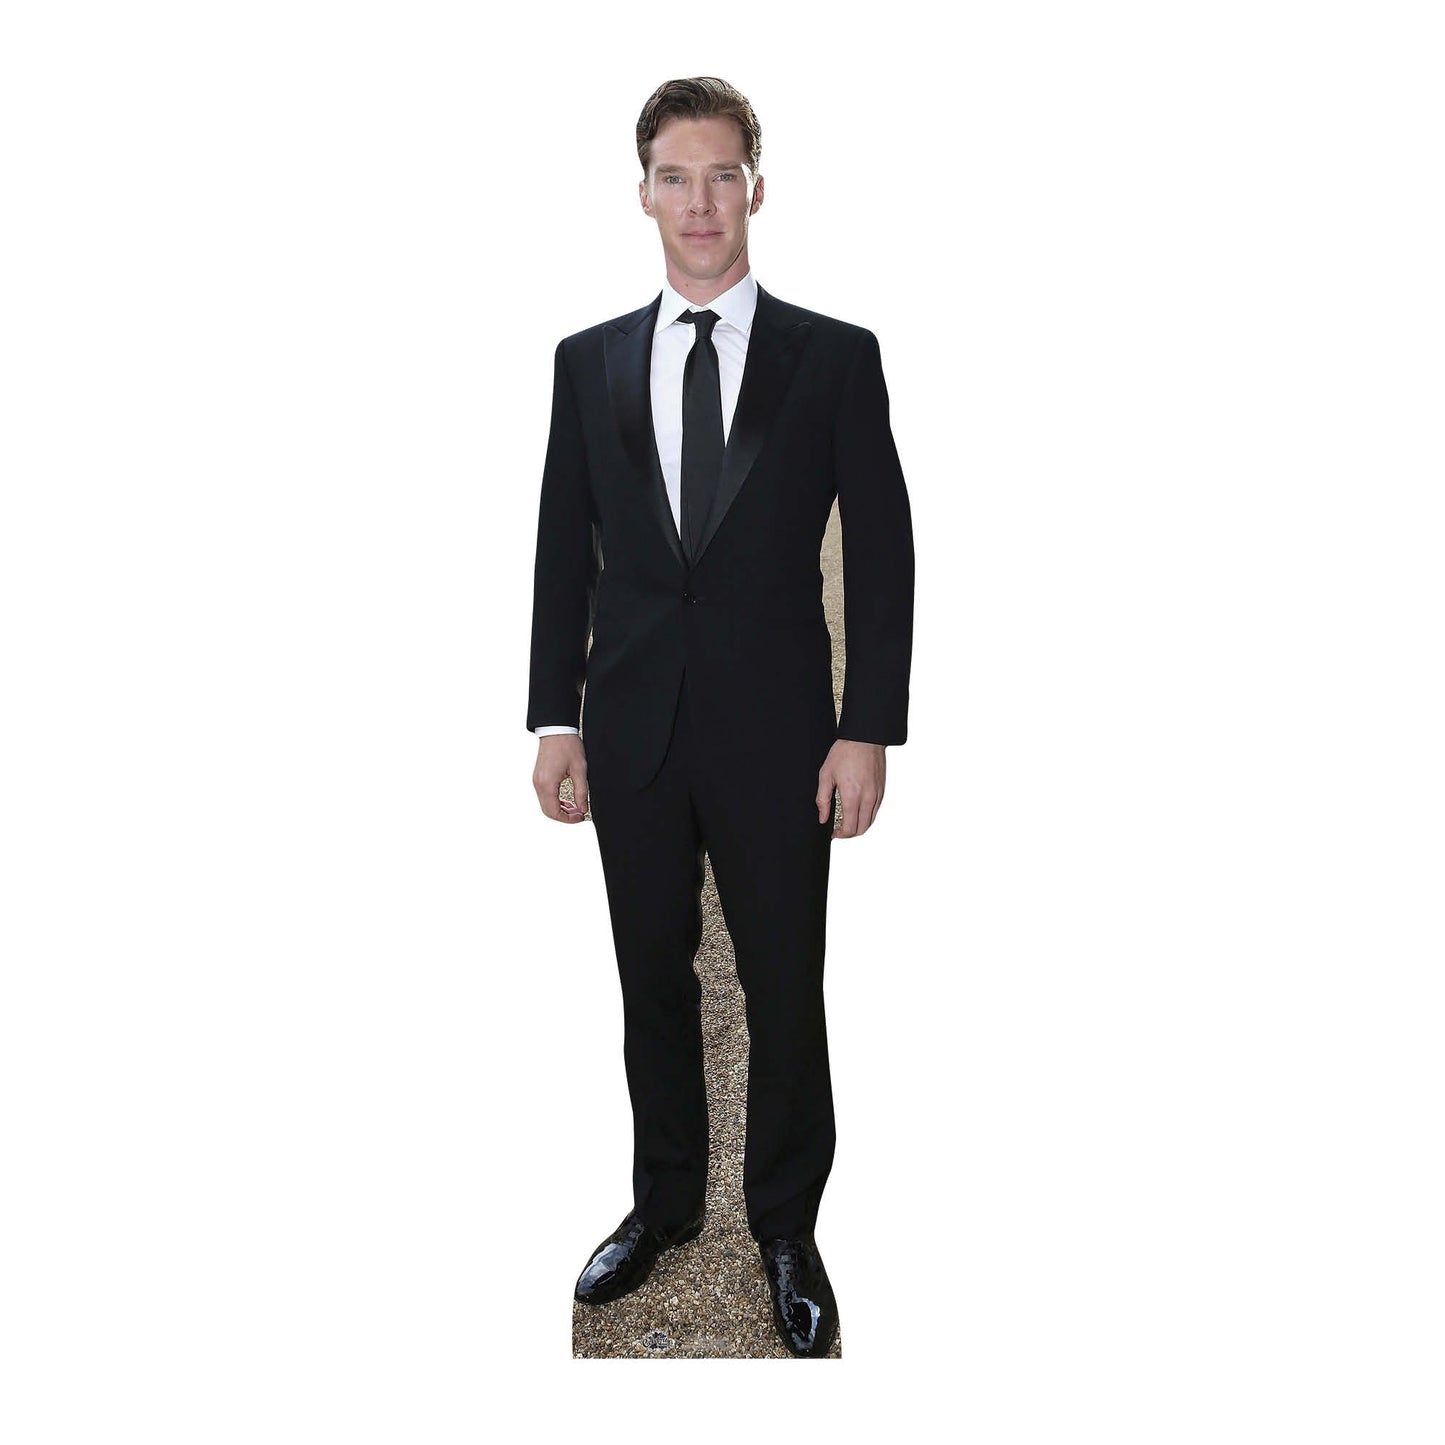 CS625 Benedict Cumberbatch Height 183cm Lifesize Cardboard Cutout